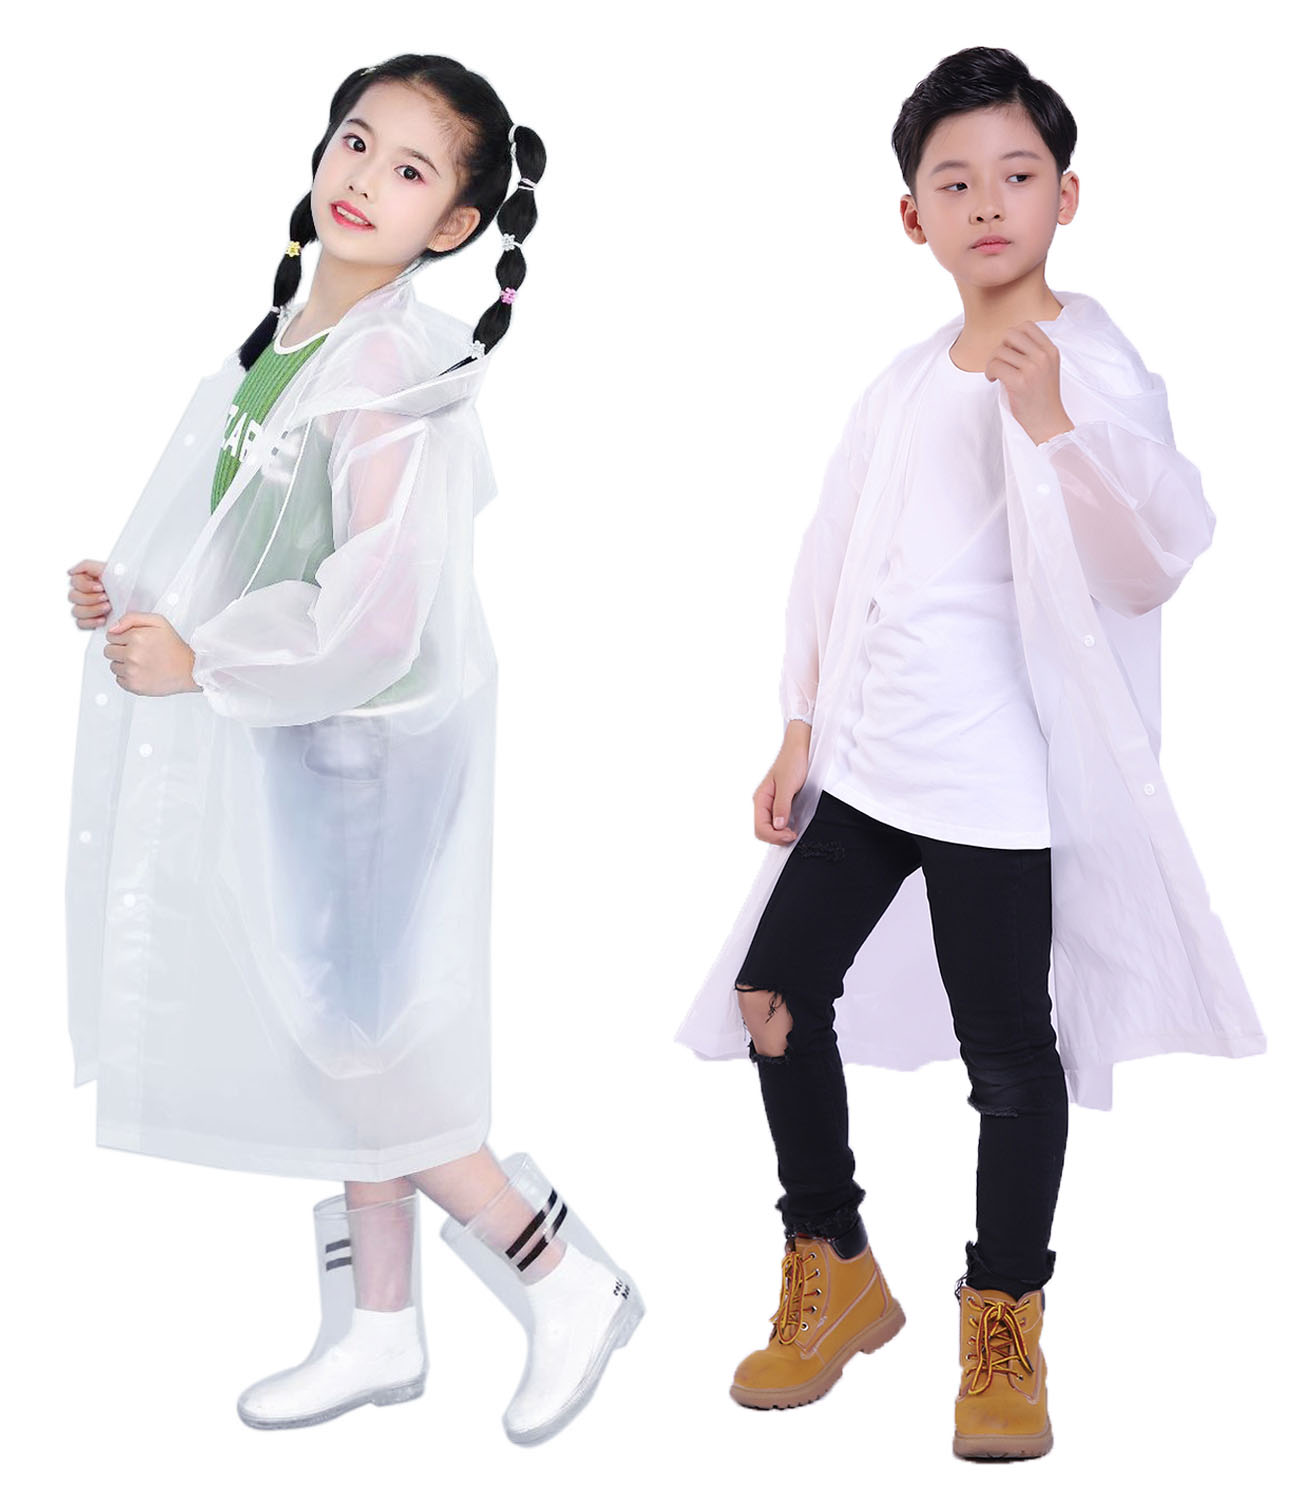 Makonus Raincoat for Kids, [Pack of 2] EVA Kids Rain Coats Reusable Rain Poncho Jacket for Boys and Girls